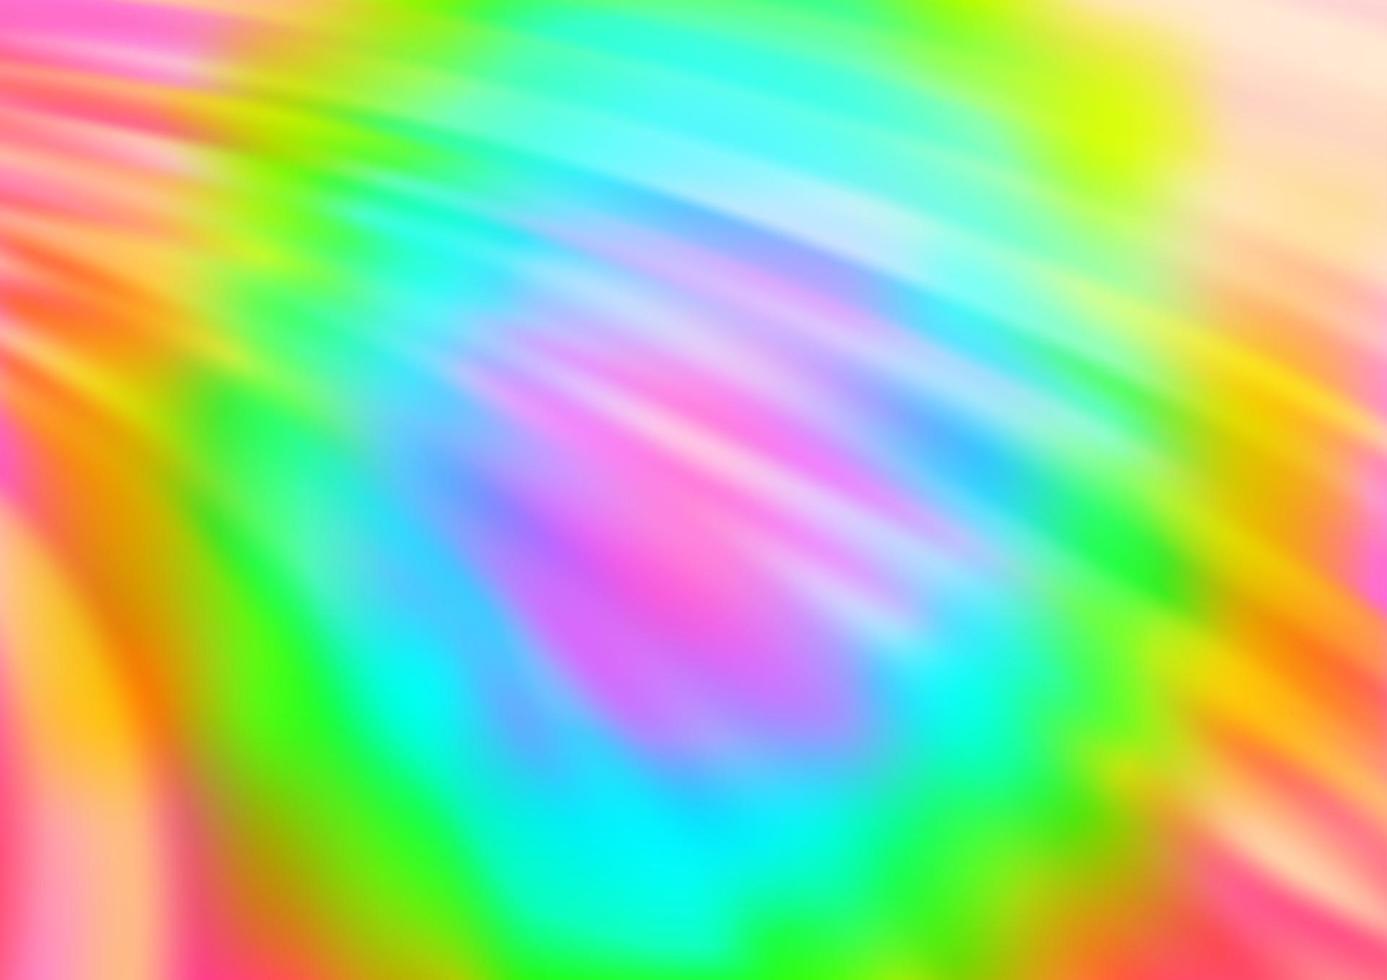 luz multicolor, fundo do vetor do arco-íris com círculos curvos.